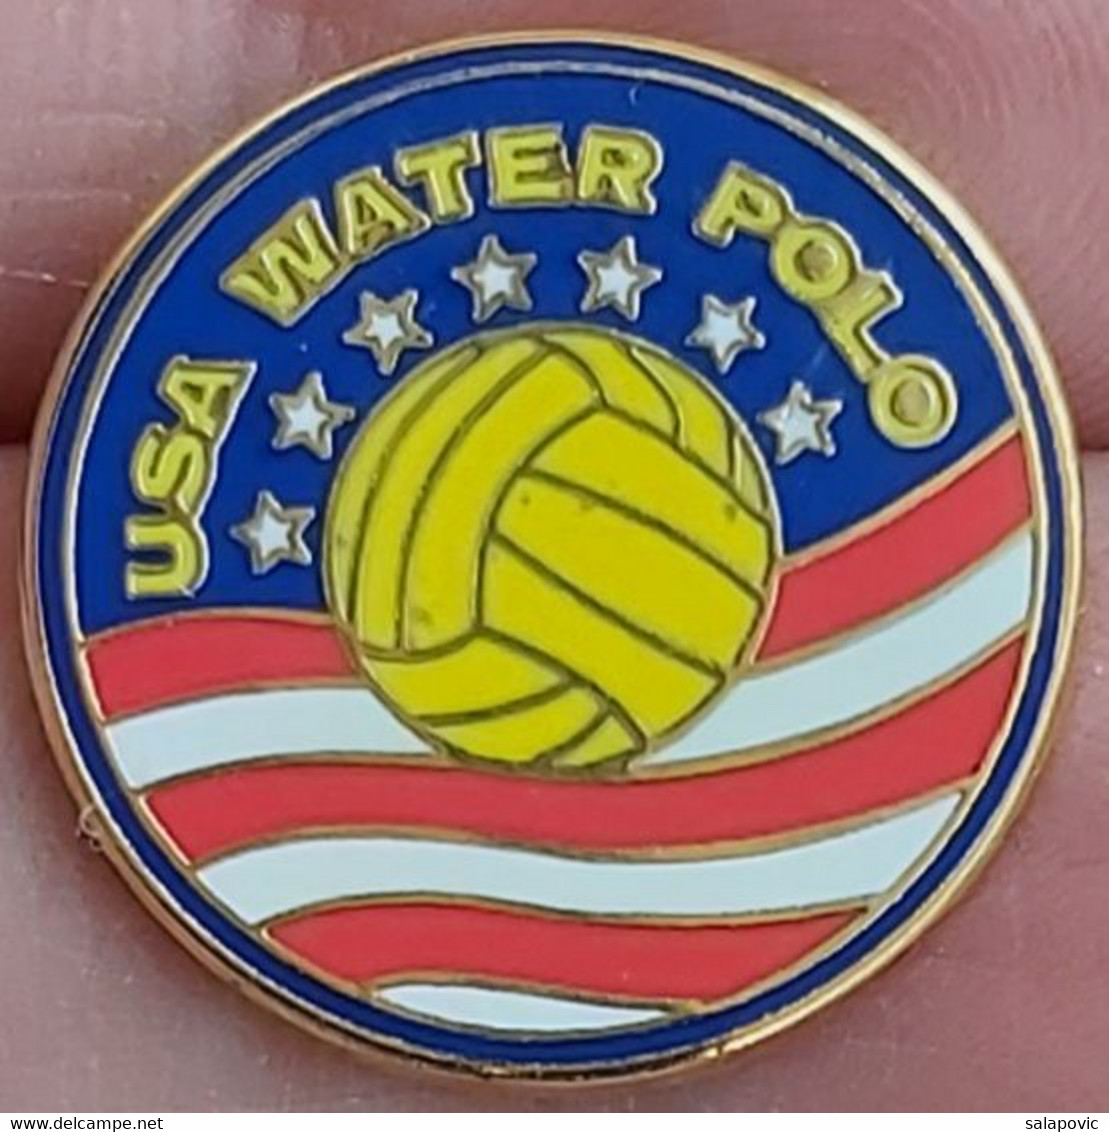 USA WATER POLO Federation Union Association PIN A7/7 - Wasserball